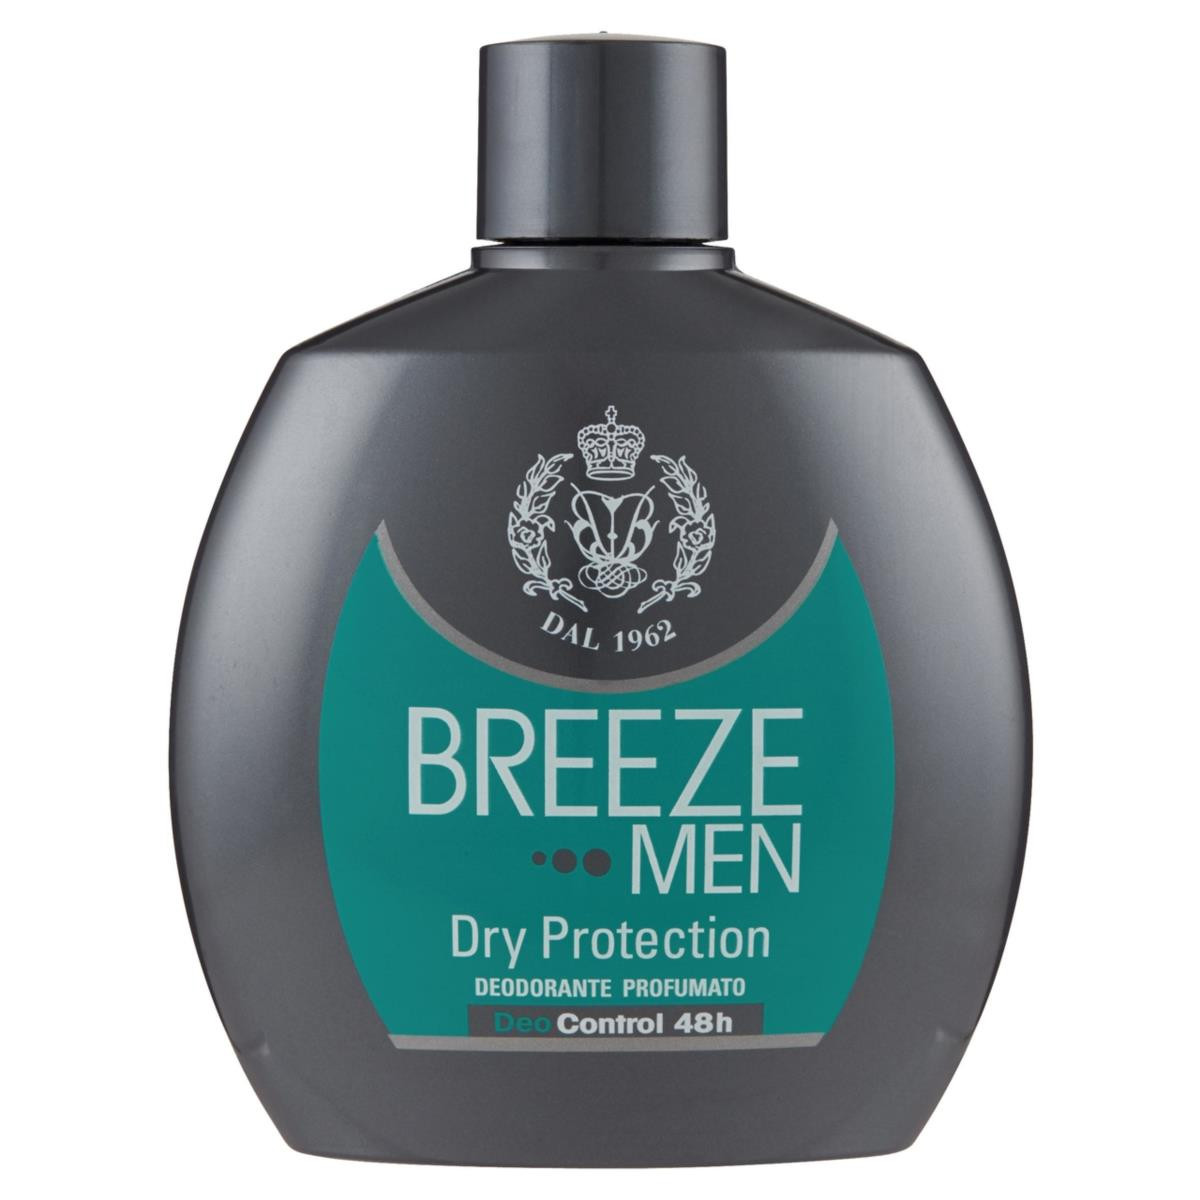 Breeze Man Dry Protection Deodorante profumato 100 ml